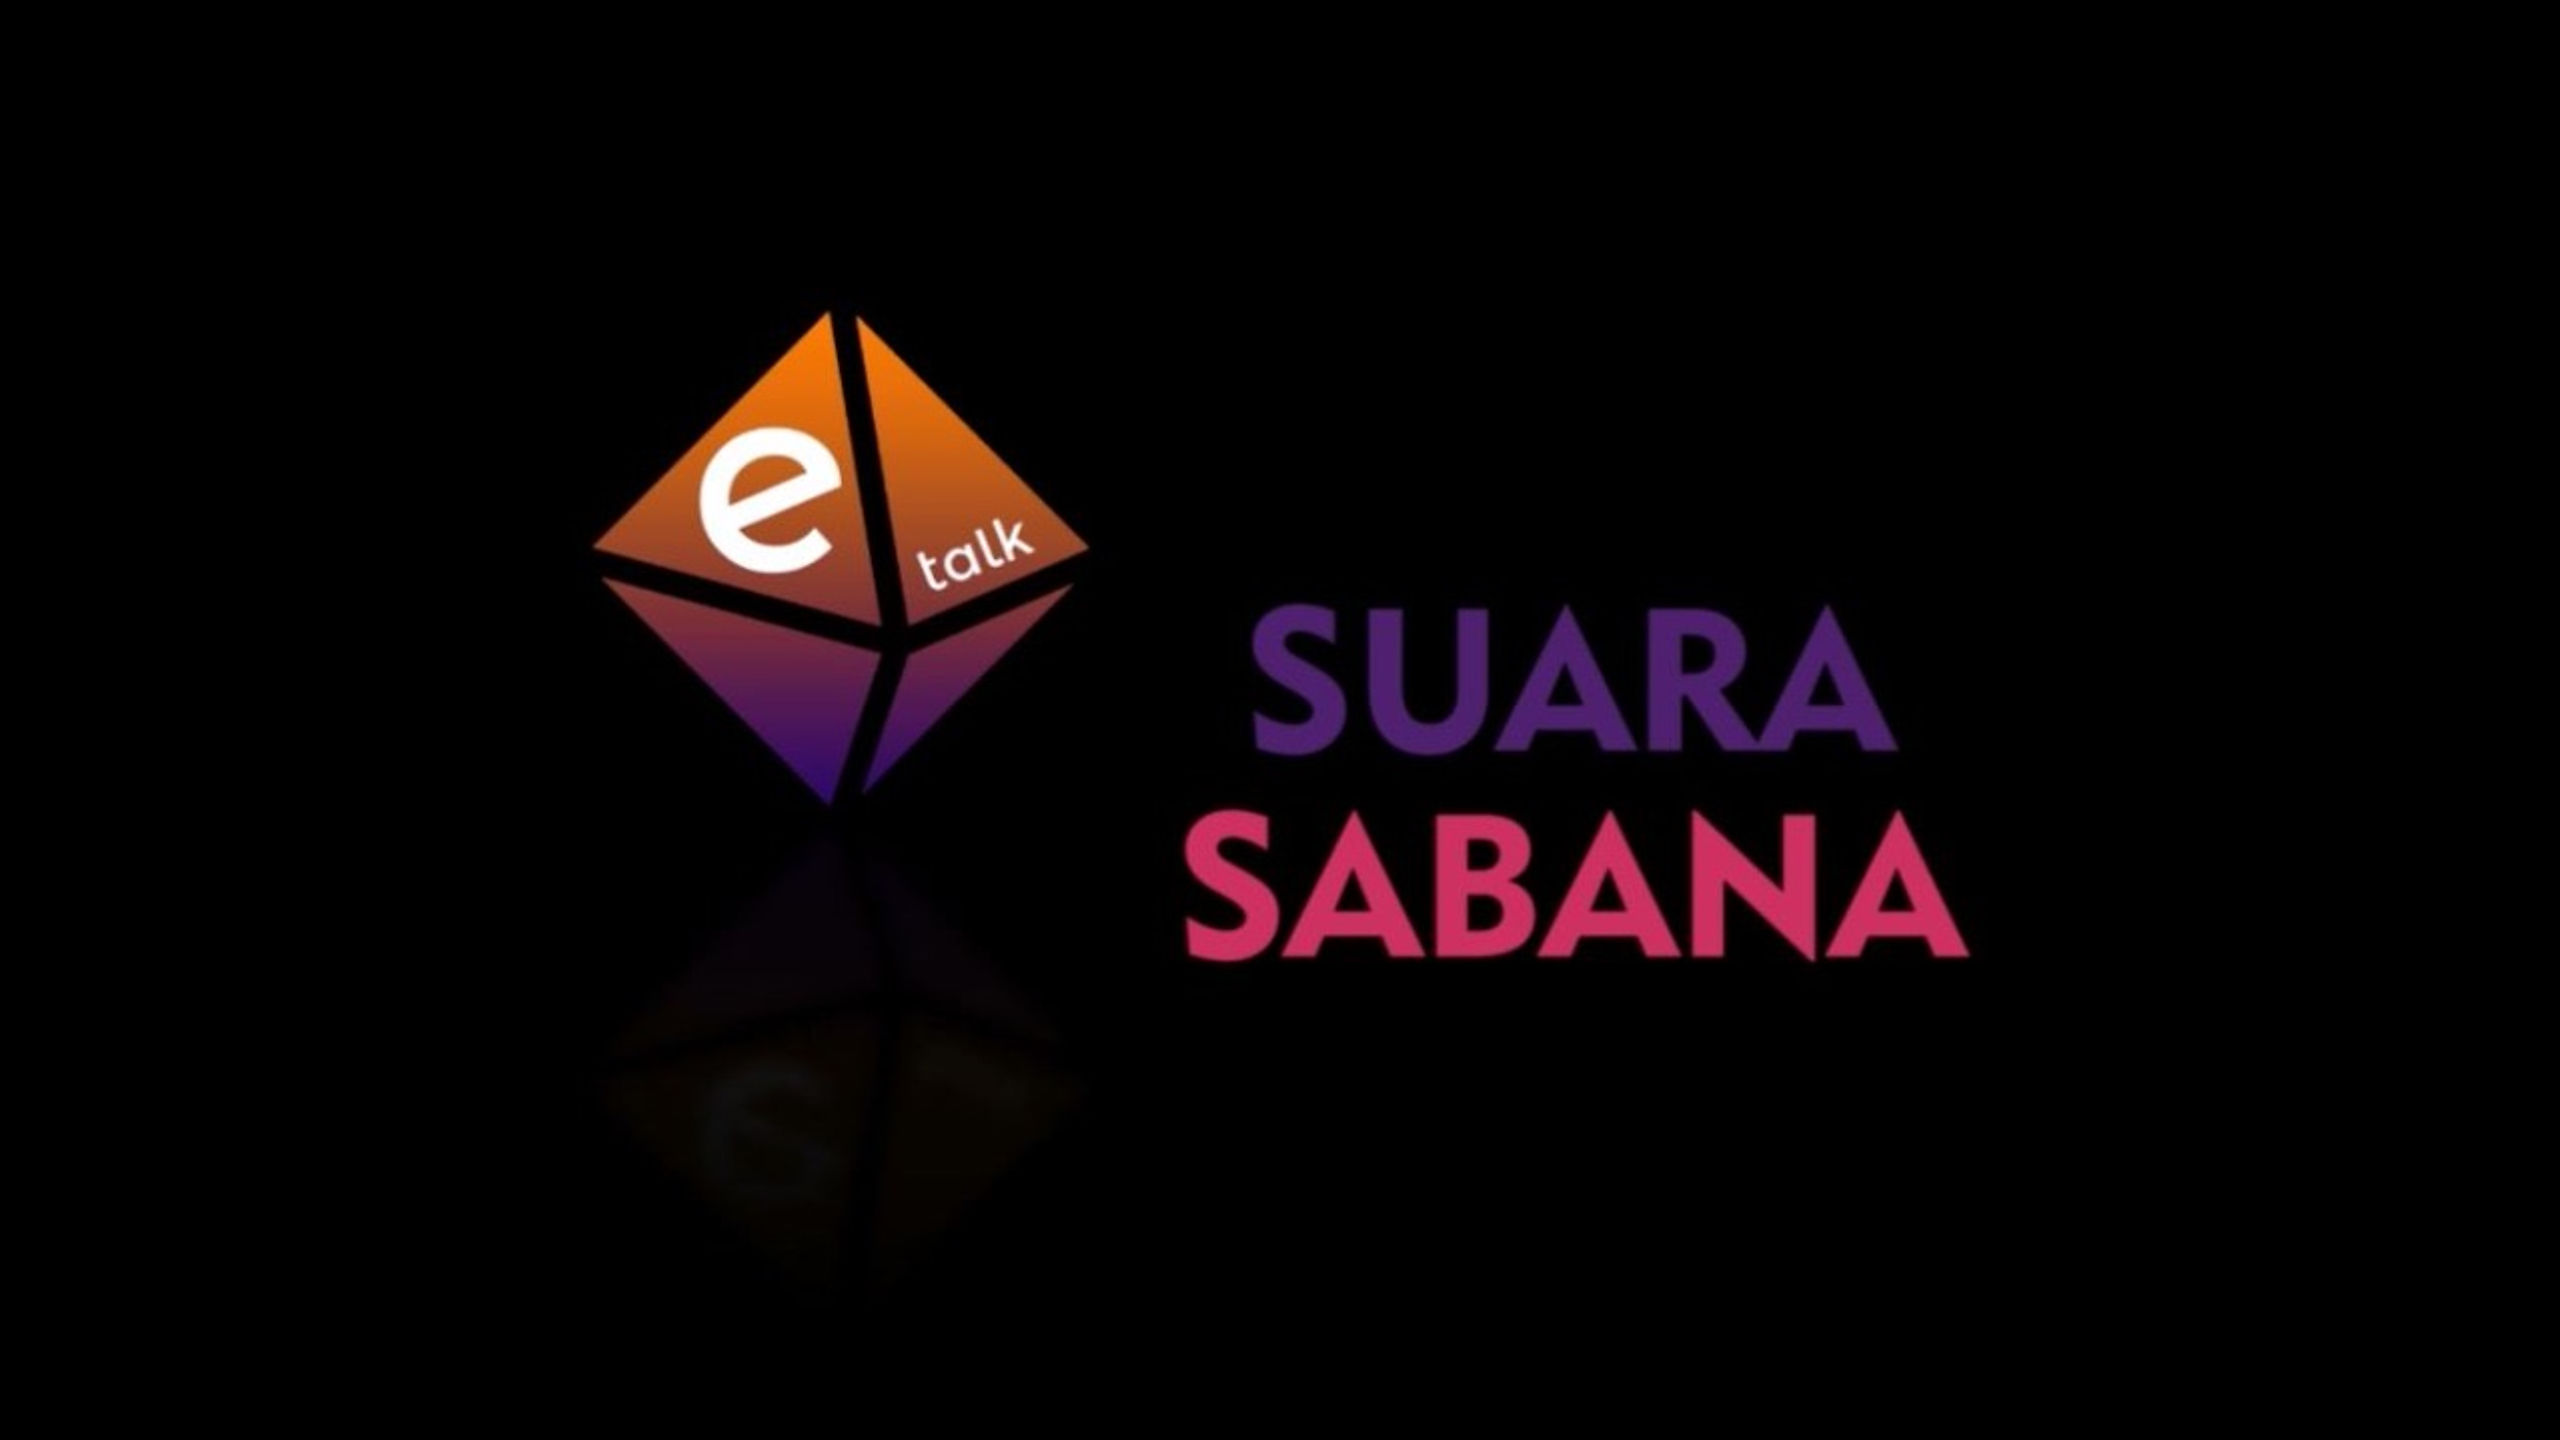 E-Talk "Suara Sabana"